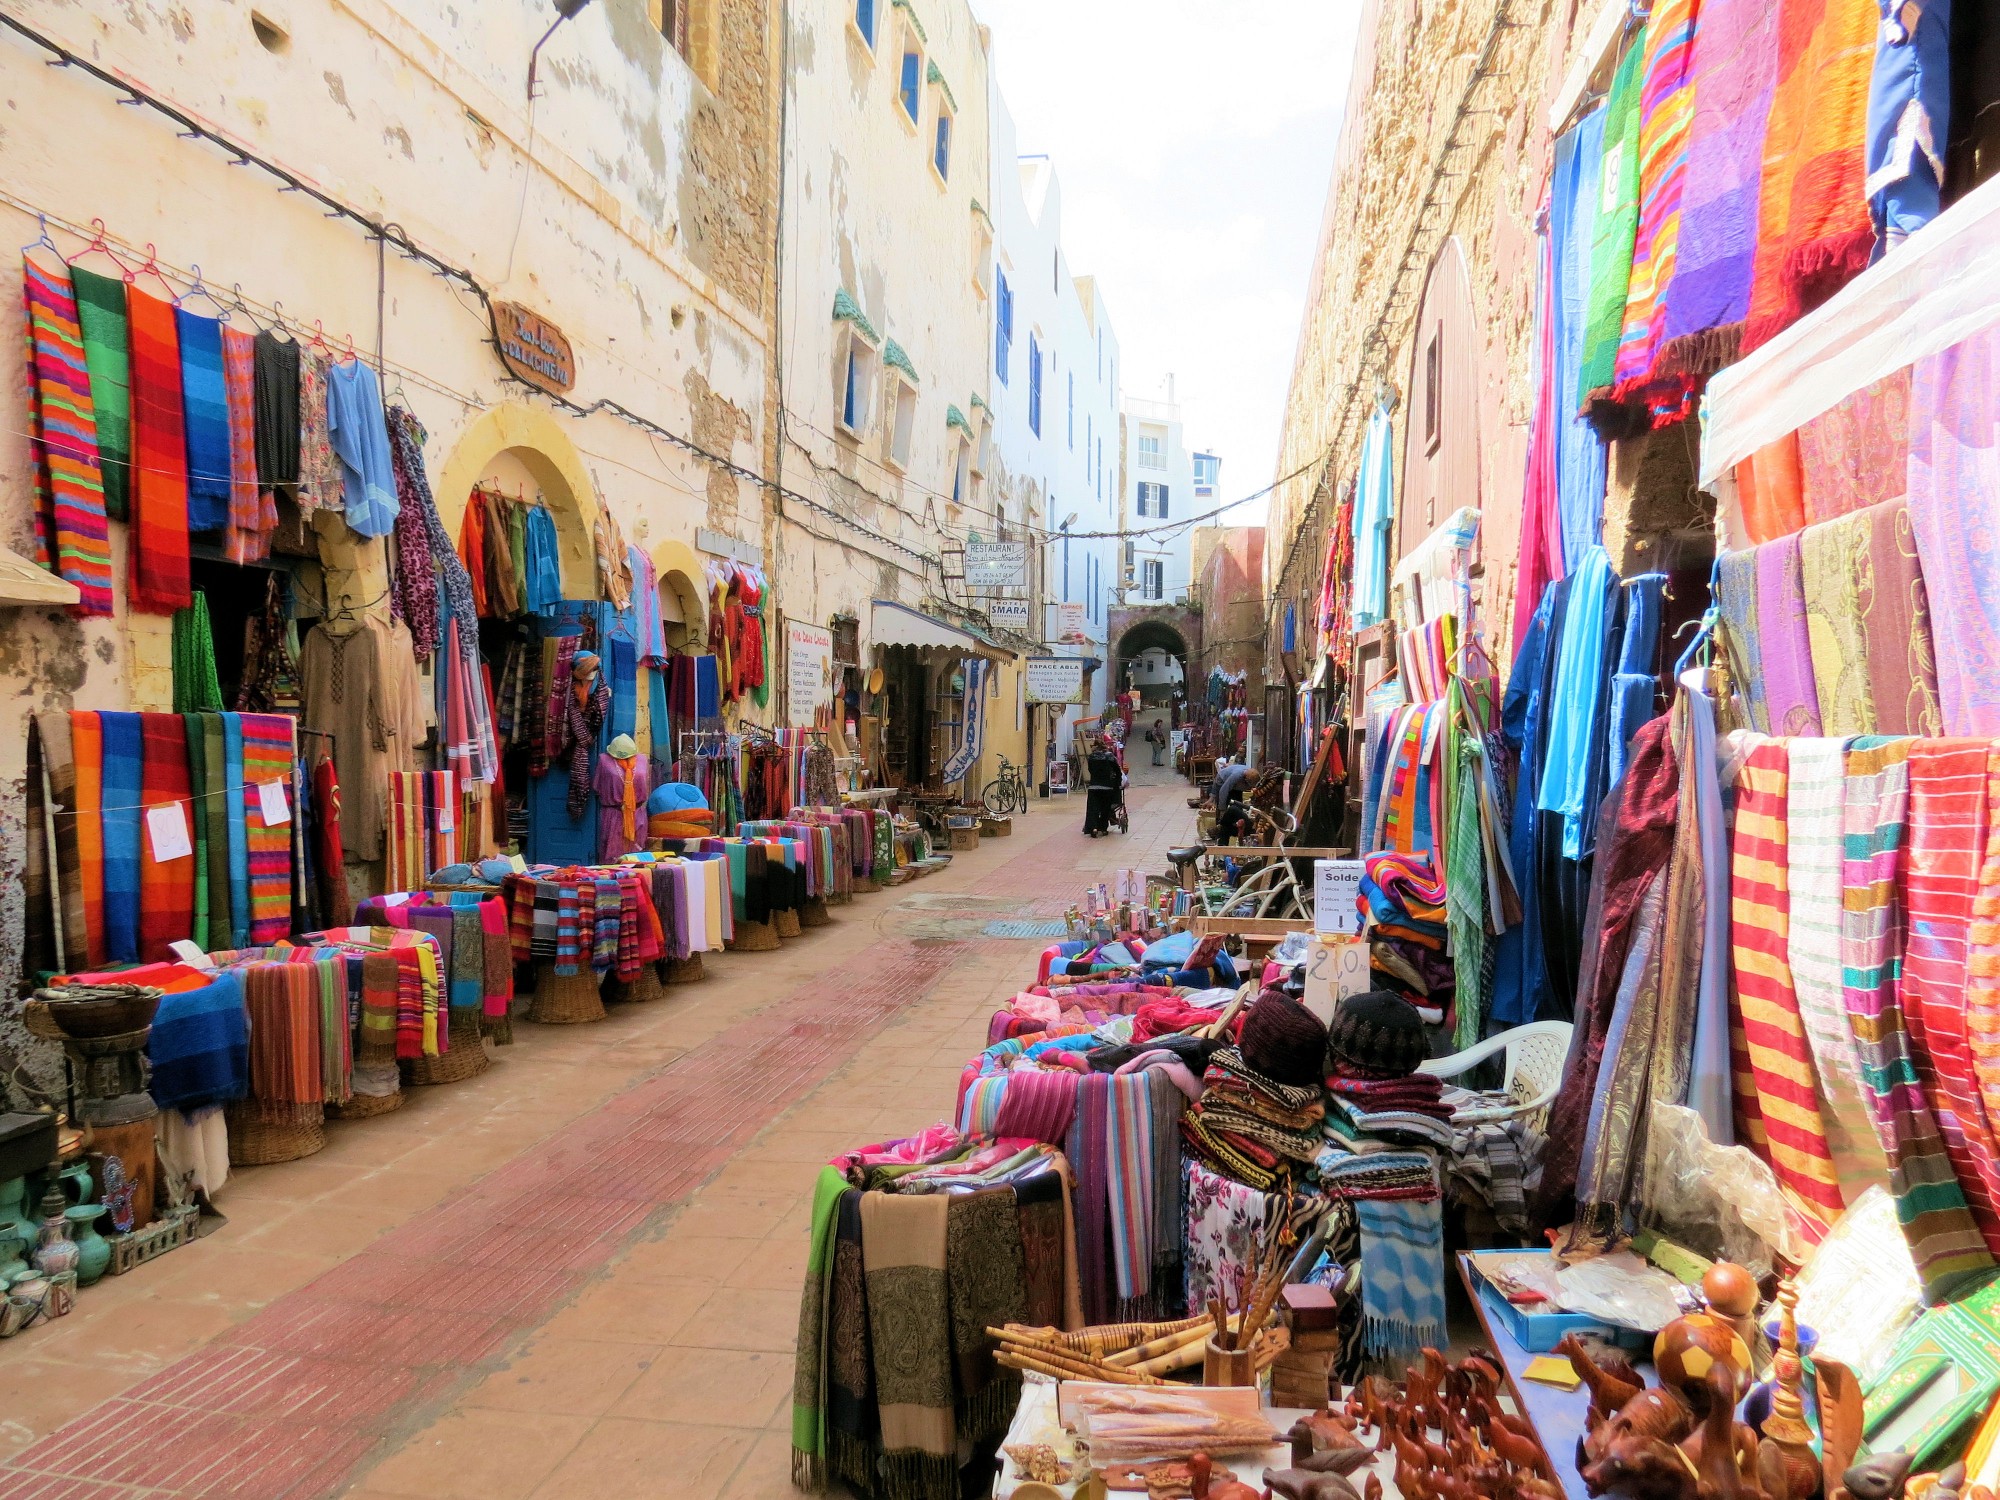 Comment venir à Essaouira ?